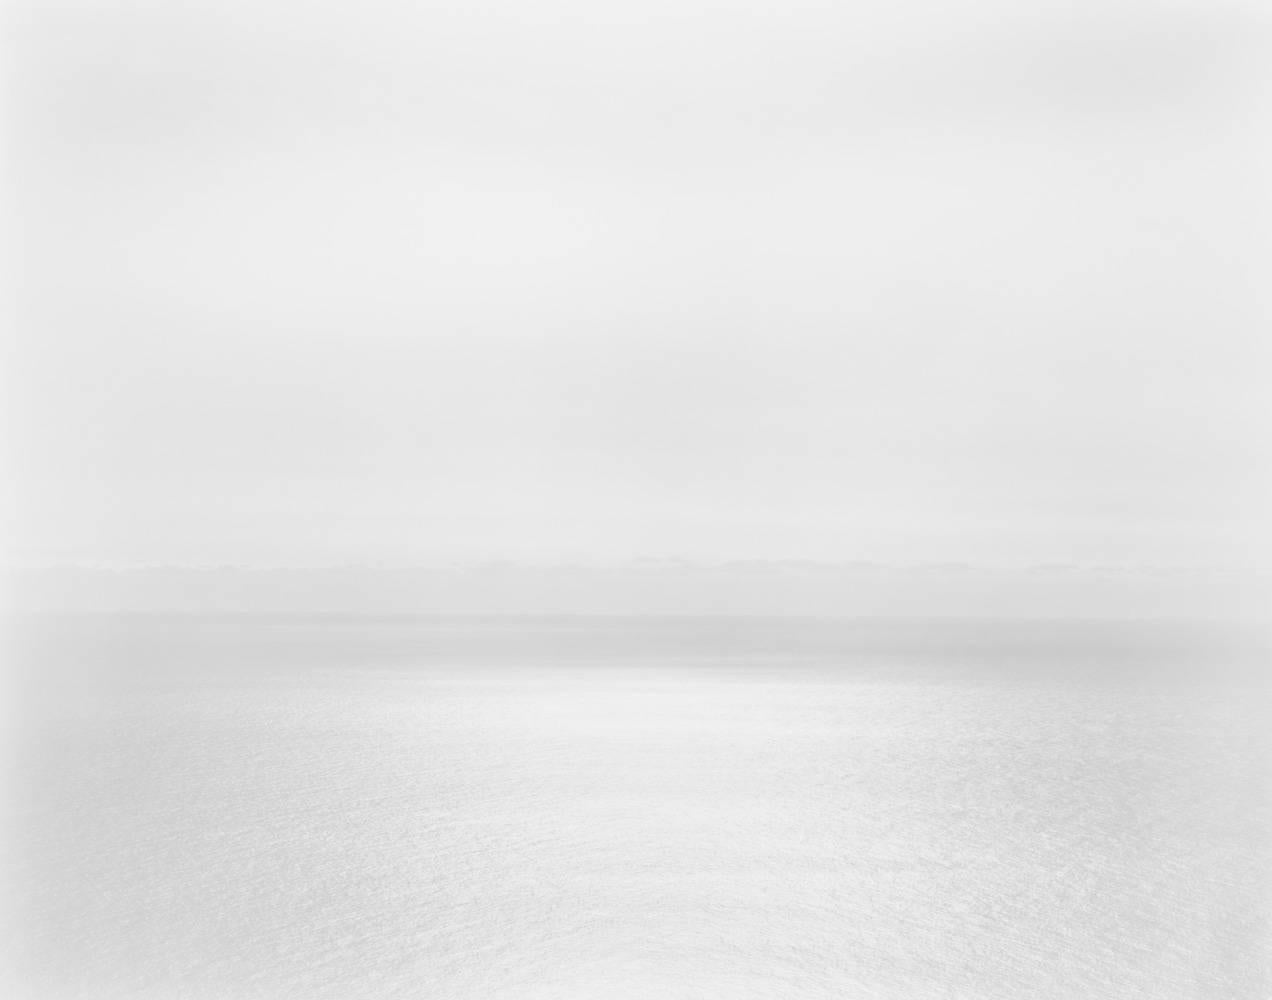 Chip Hooper Black and White Photograph – Nachthimmel, Pazifischer Ozean